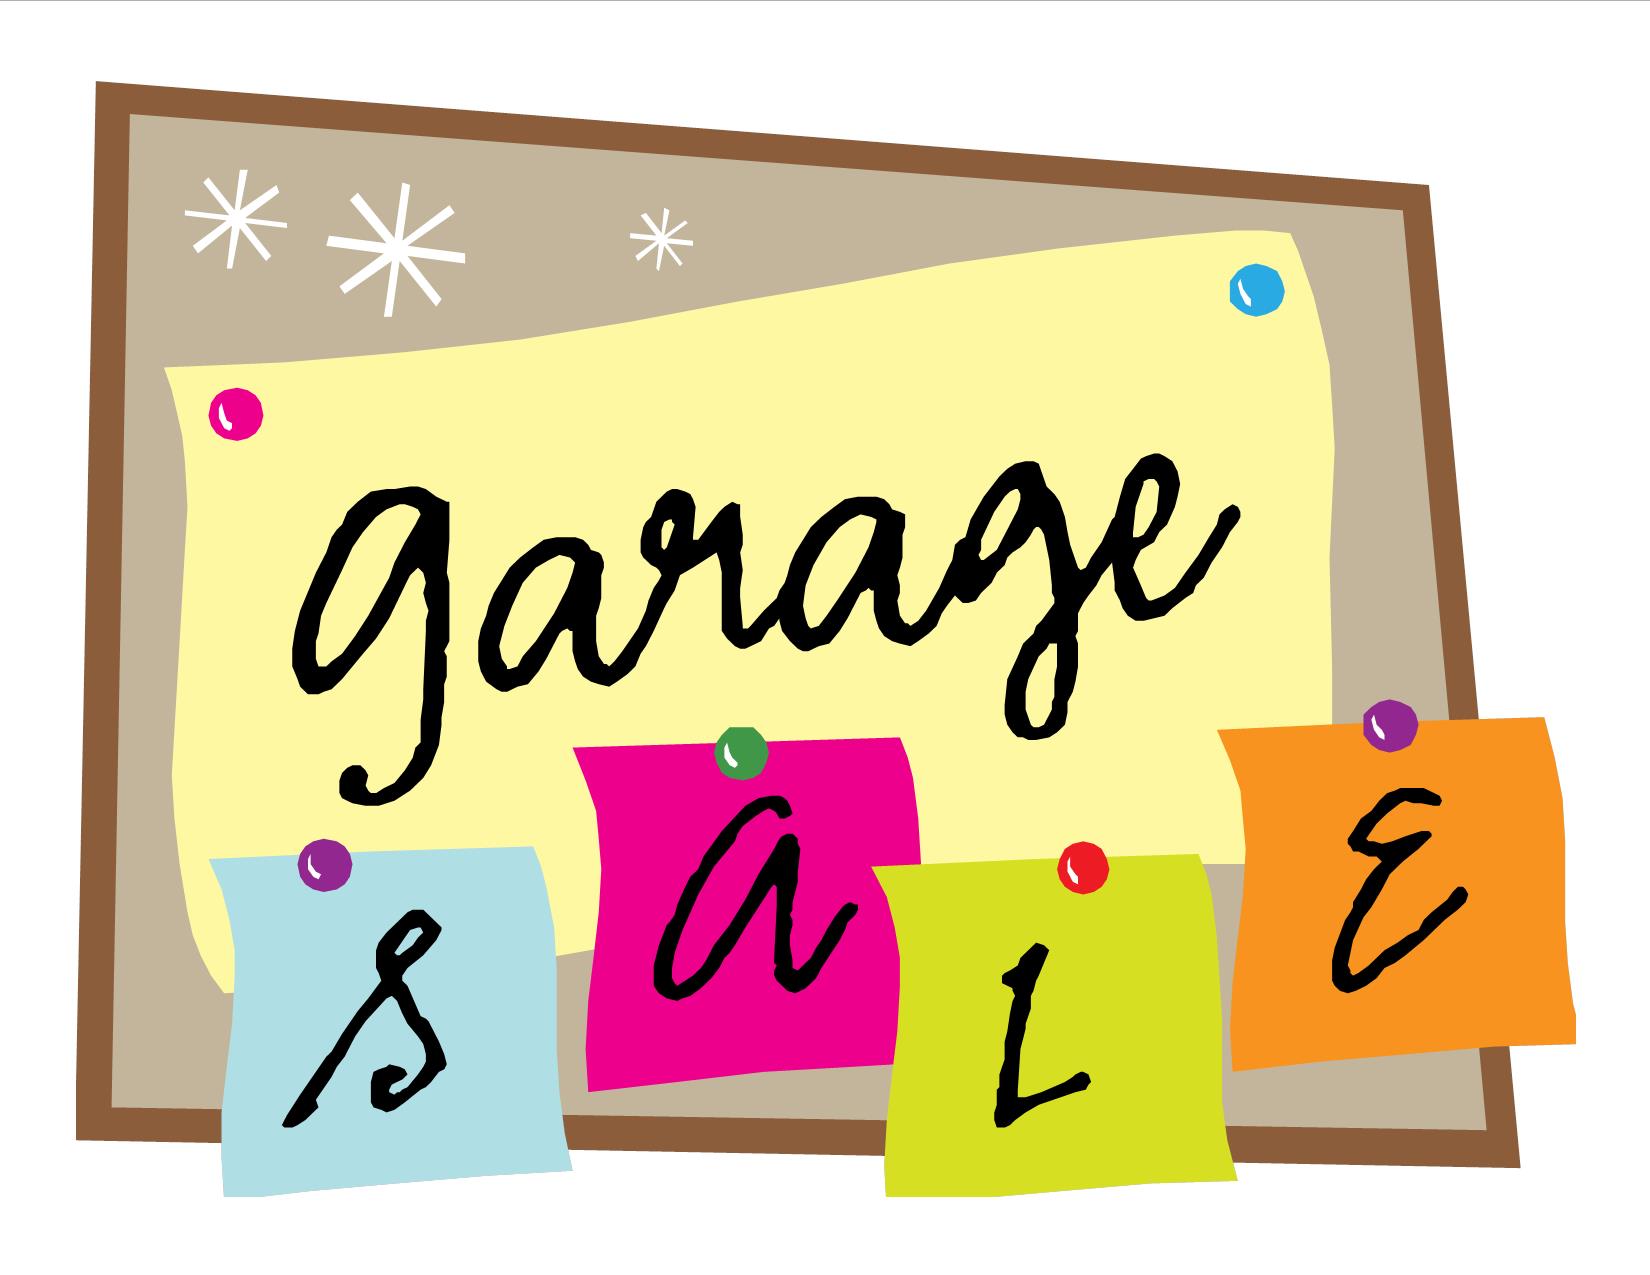 Having a garage sale? | imconfident